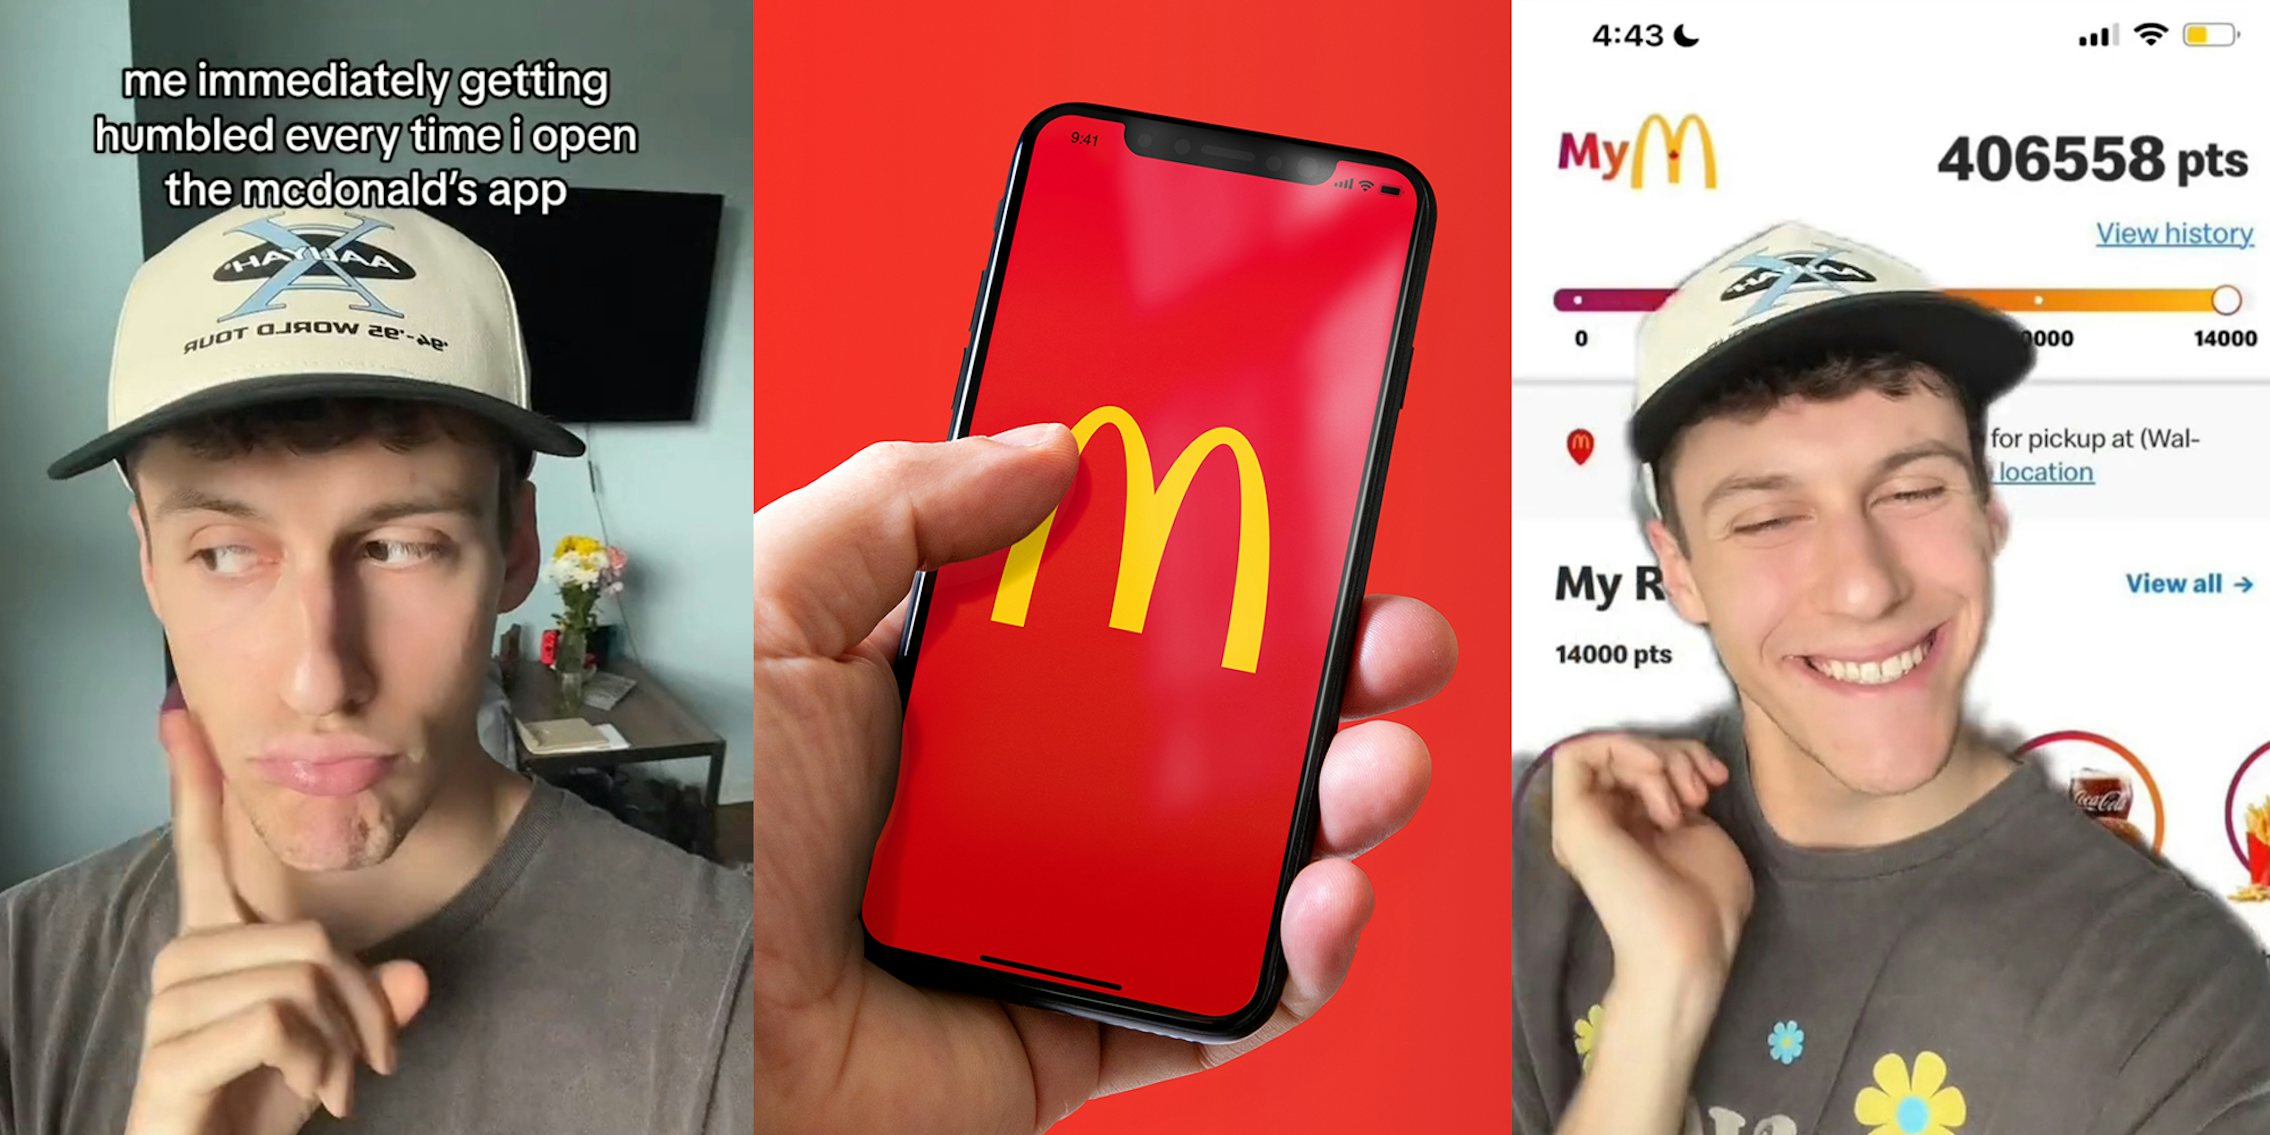 McDonald's customer has more than 400,000 app points